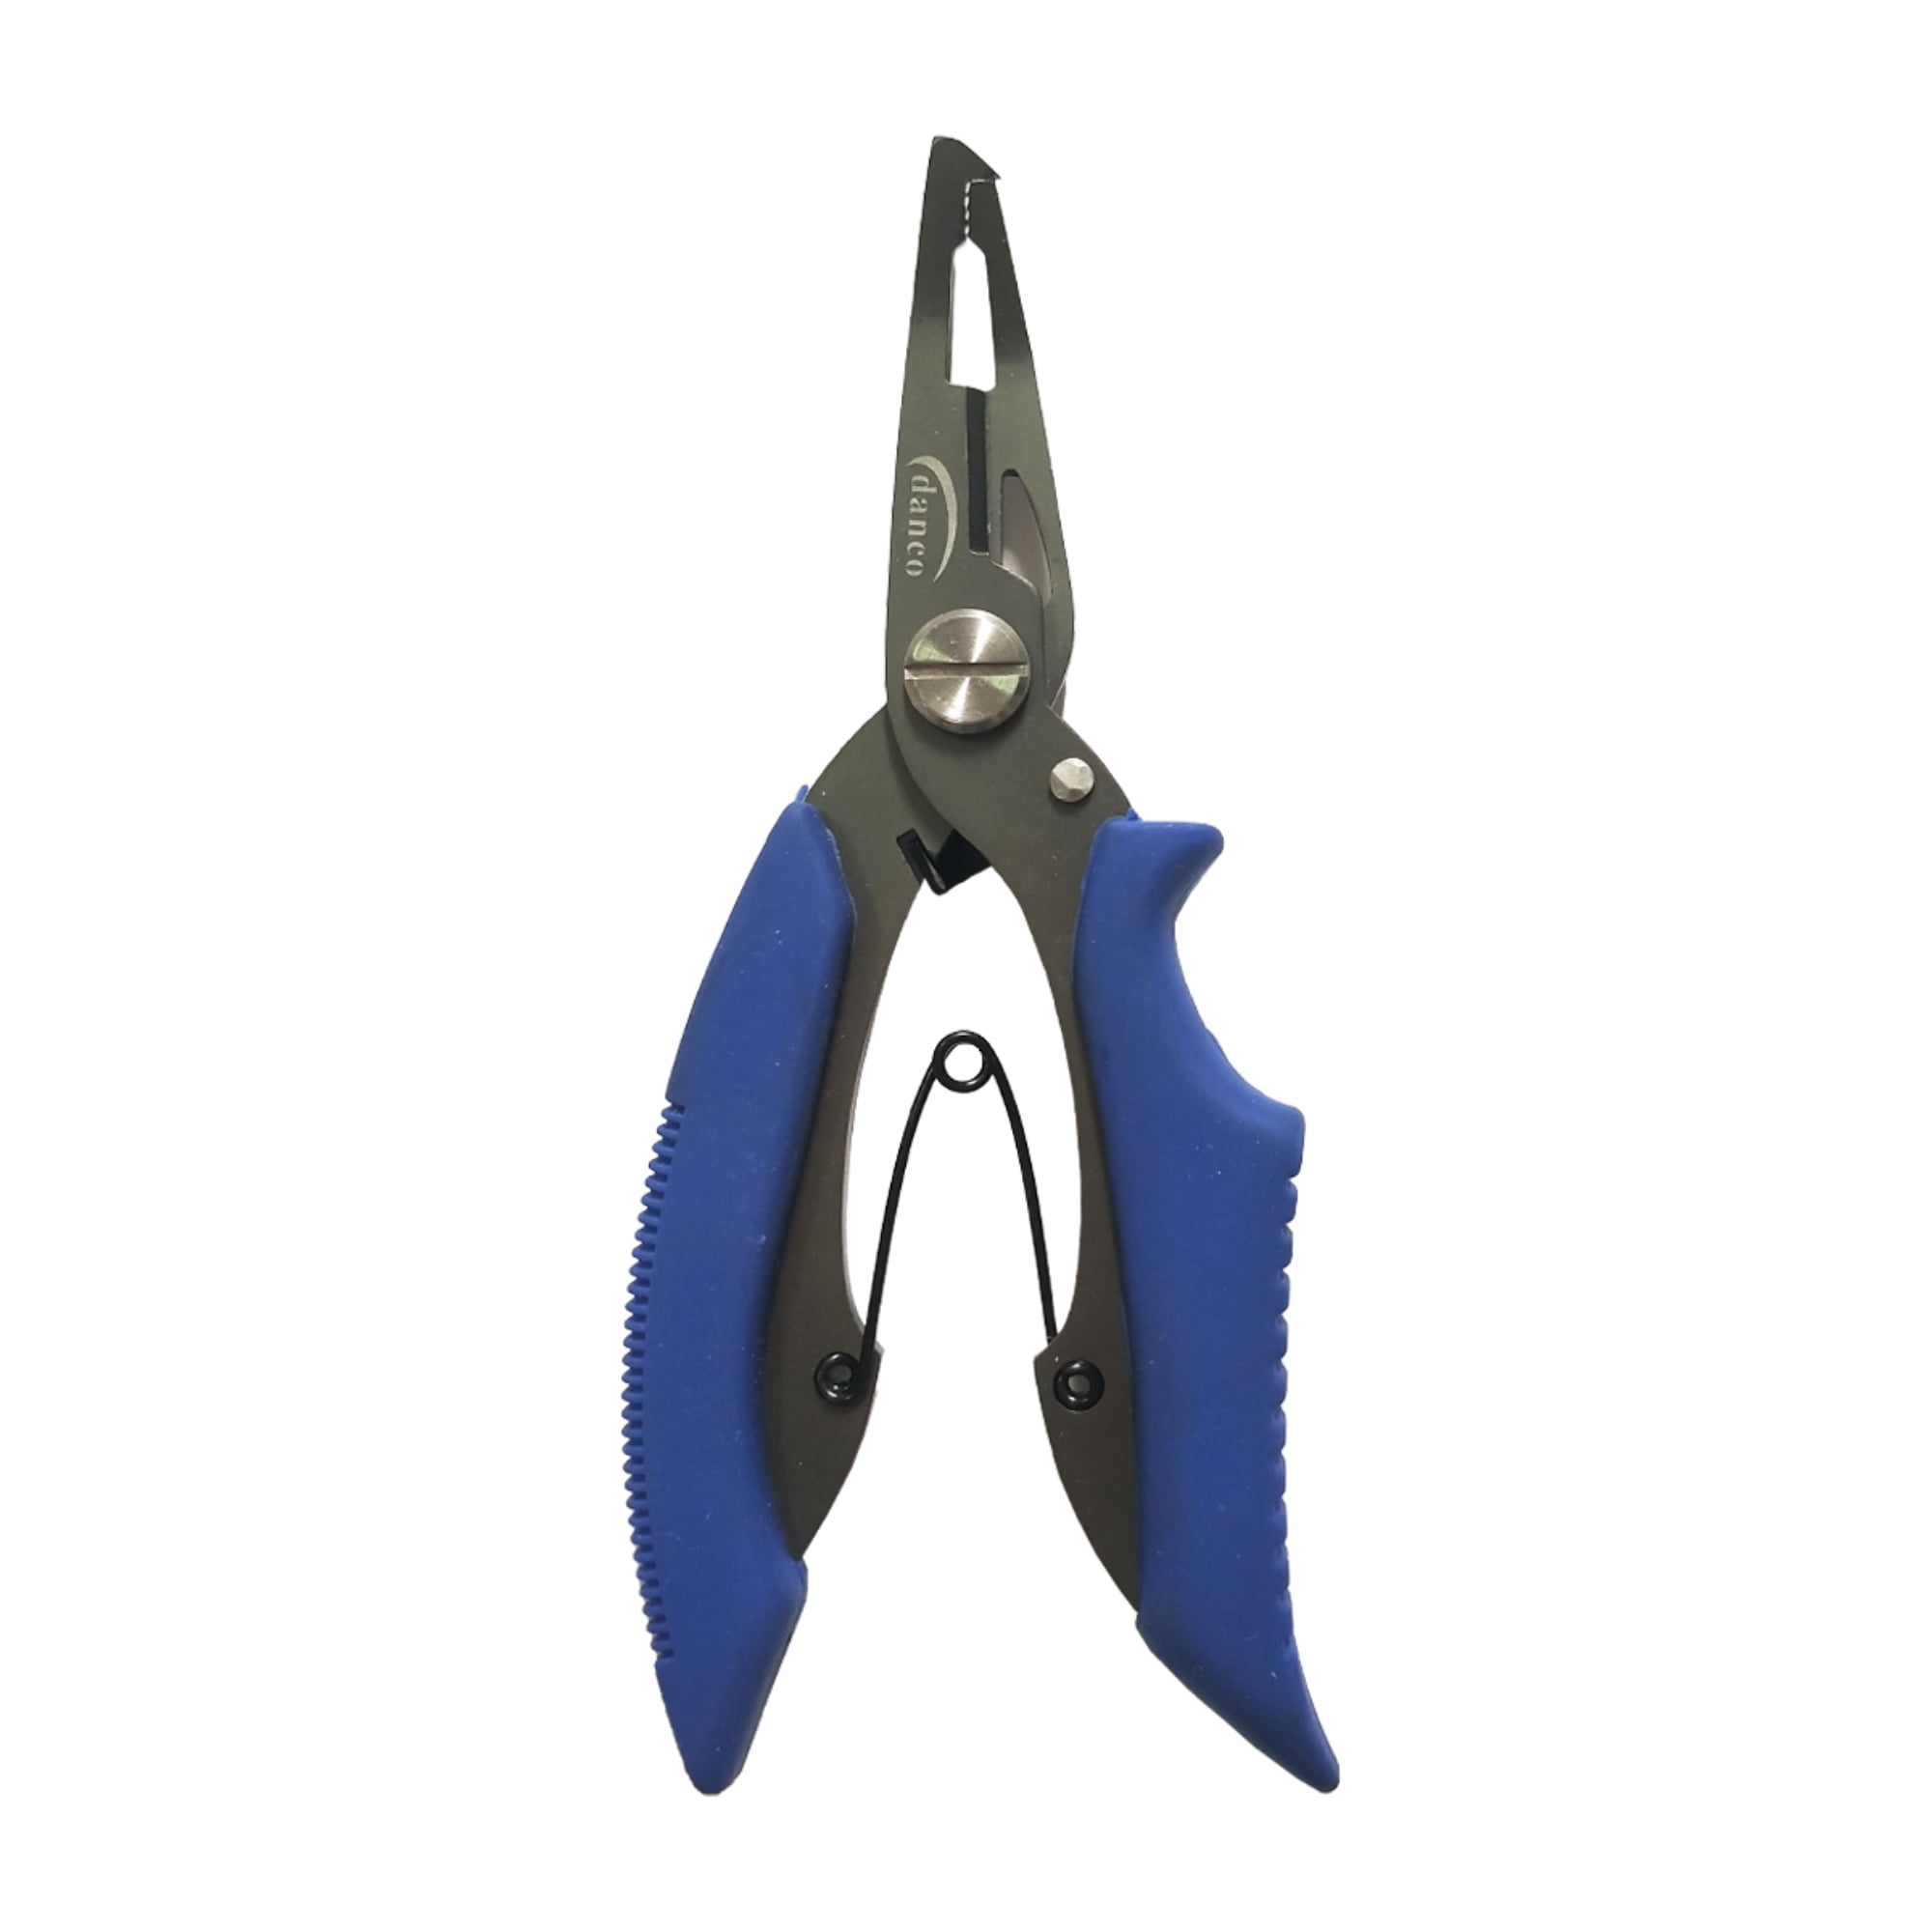 Danco Sports Essential Series 5 inch Split Ring Braid Cutter Pliers, Stainless Steel